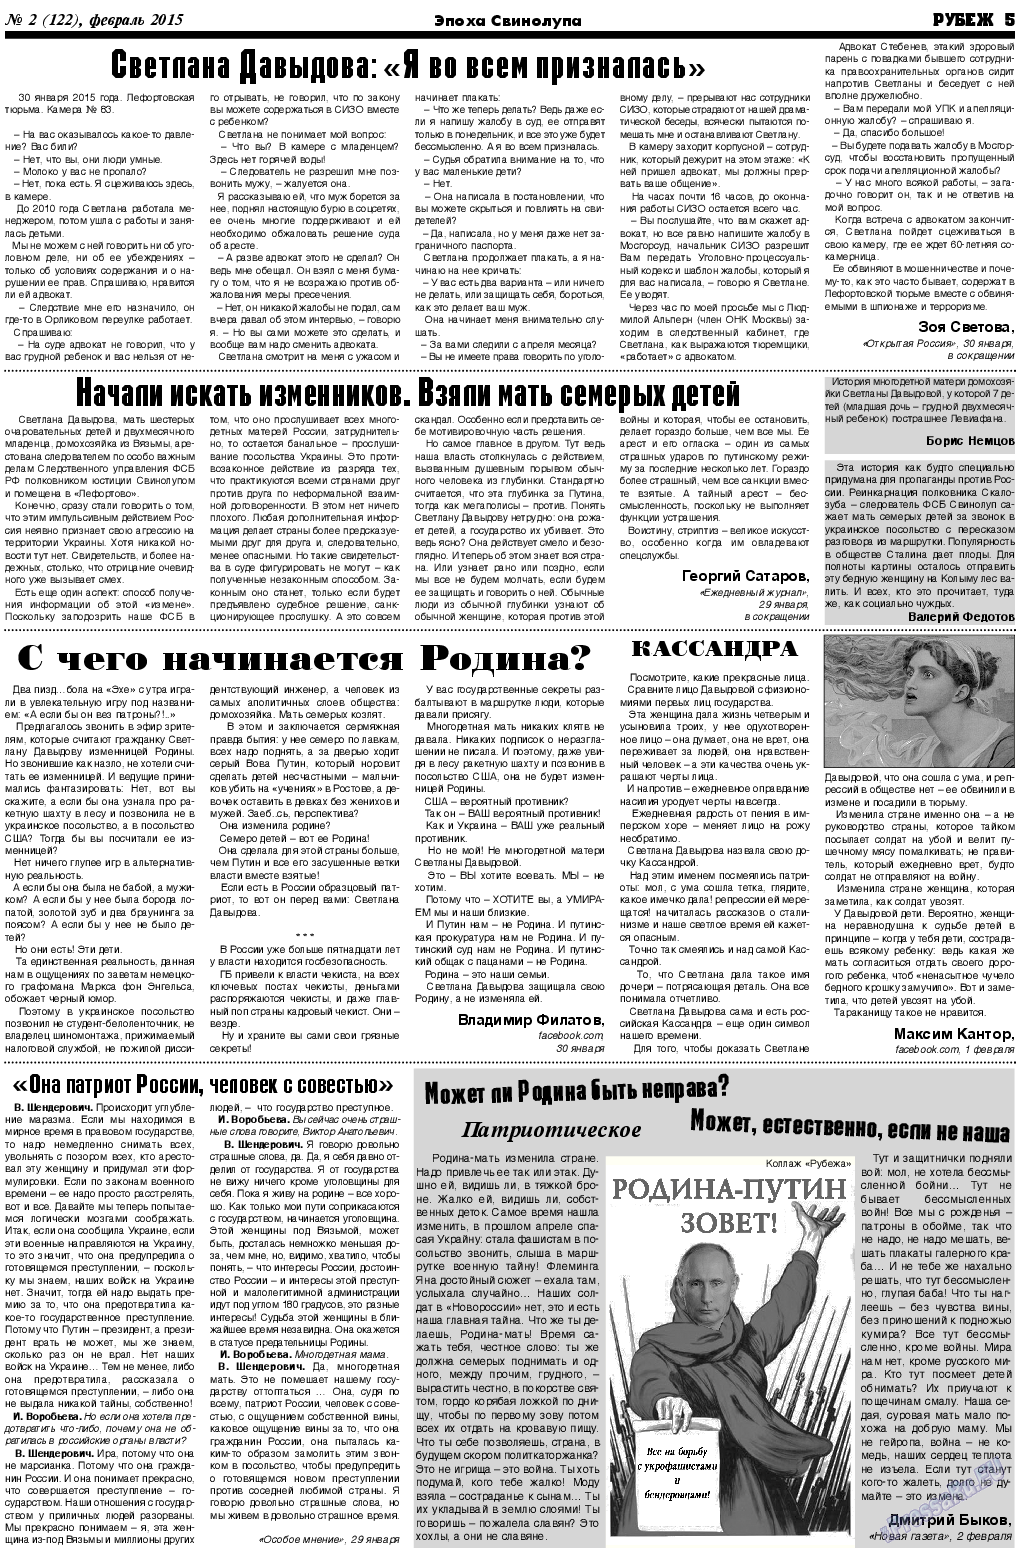 Рубеж, газета. 2015 №2 стр.5